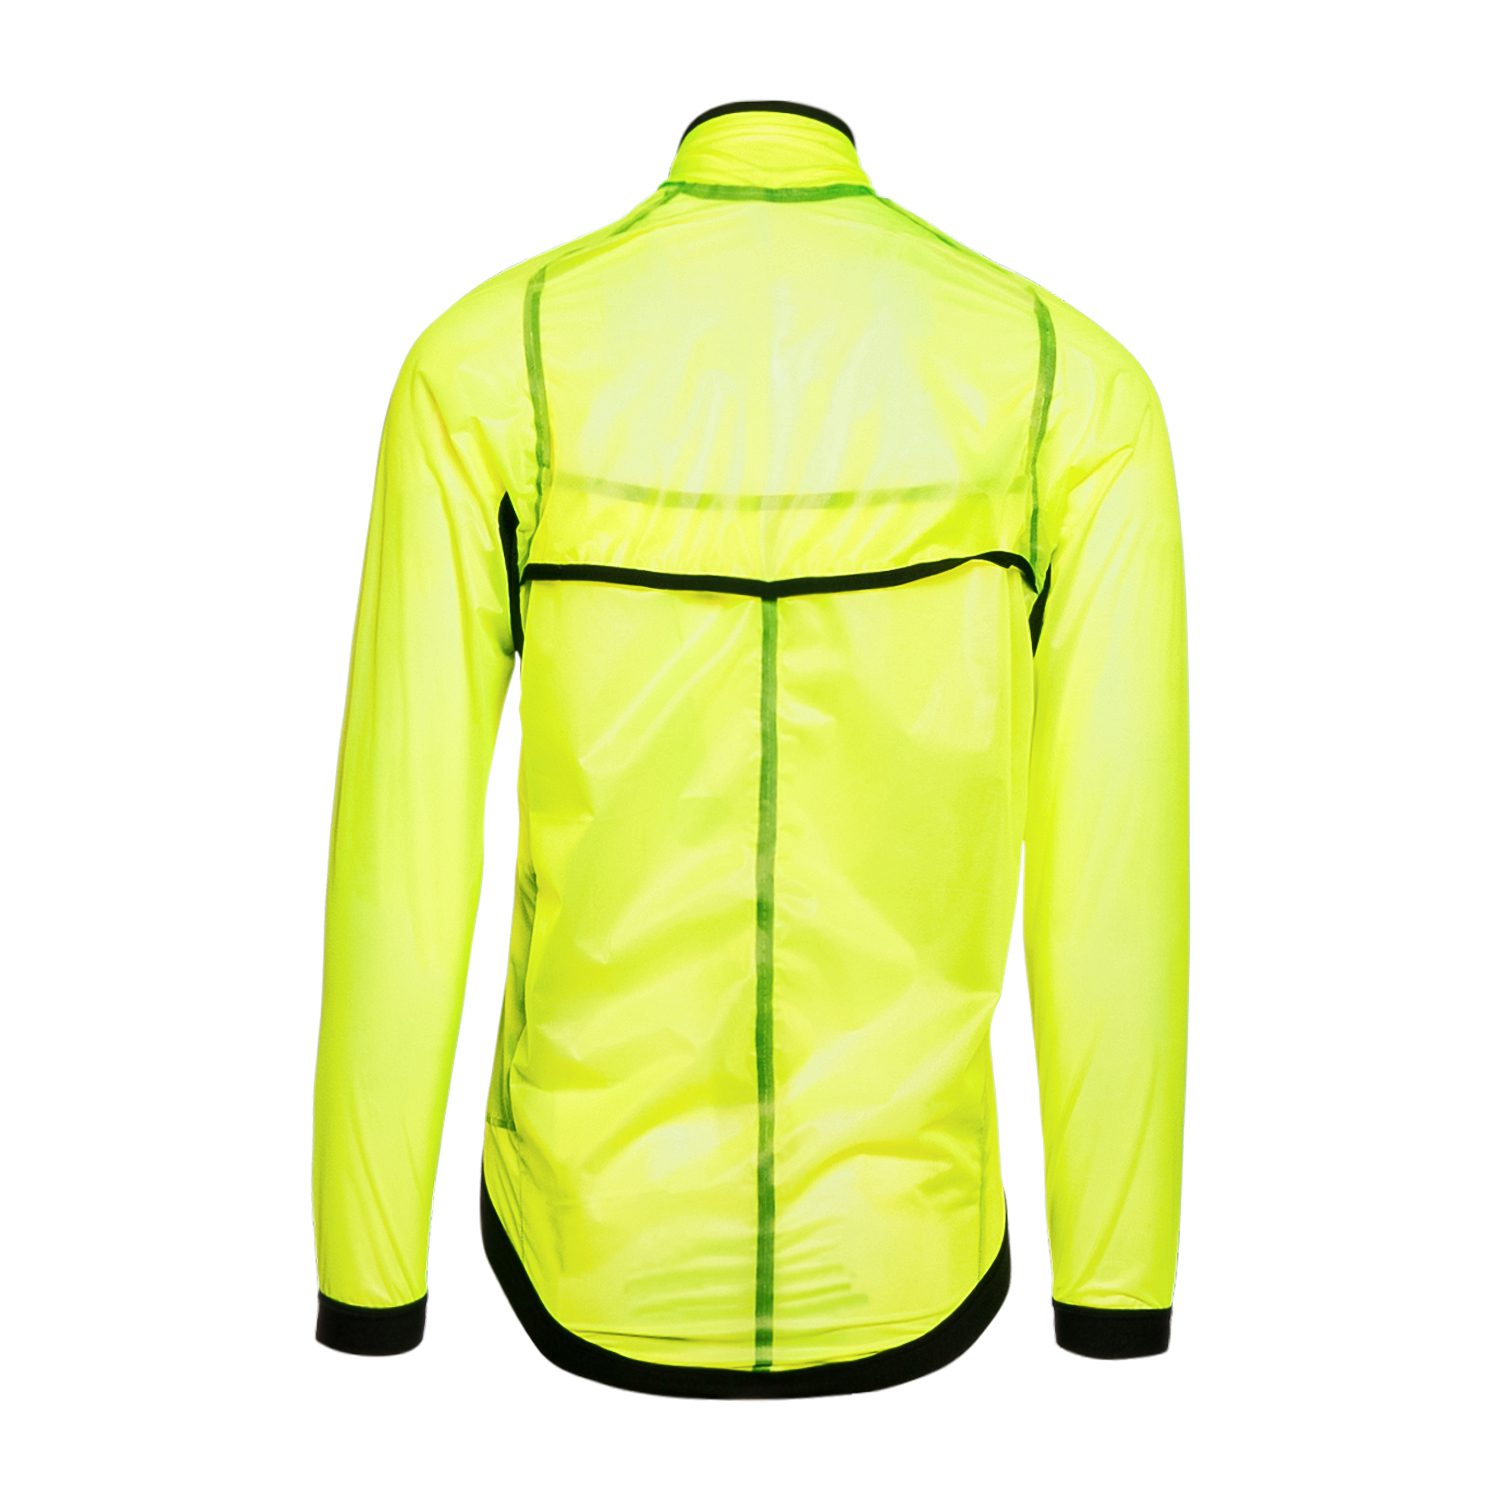 Epic Rainy Jacket Fluo Yellow | Bioracer